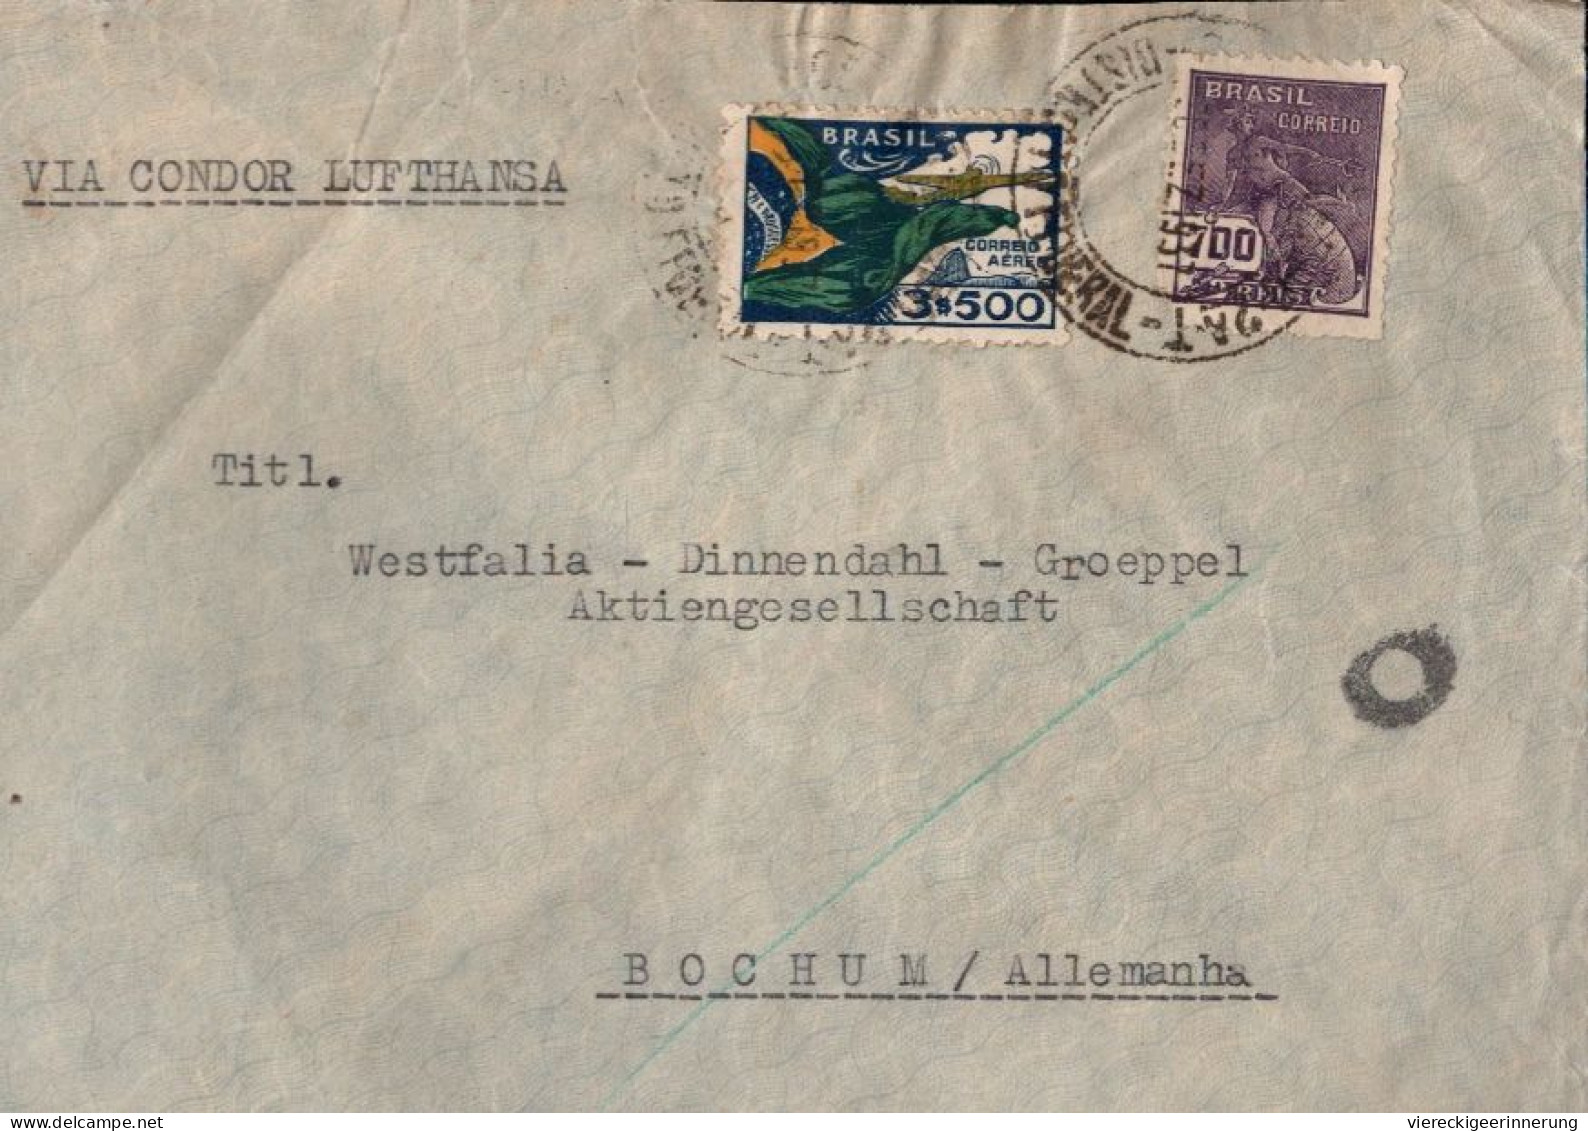 ! Luftpostbrief, Airmail Cover, 1937 Aus Rio De Janeiro, Brasilien, Via Condor Lufthansa, Nach Bochum - Poste Aérienne